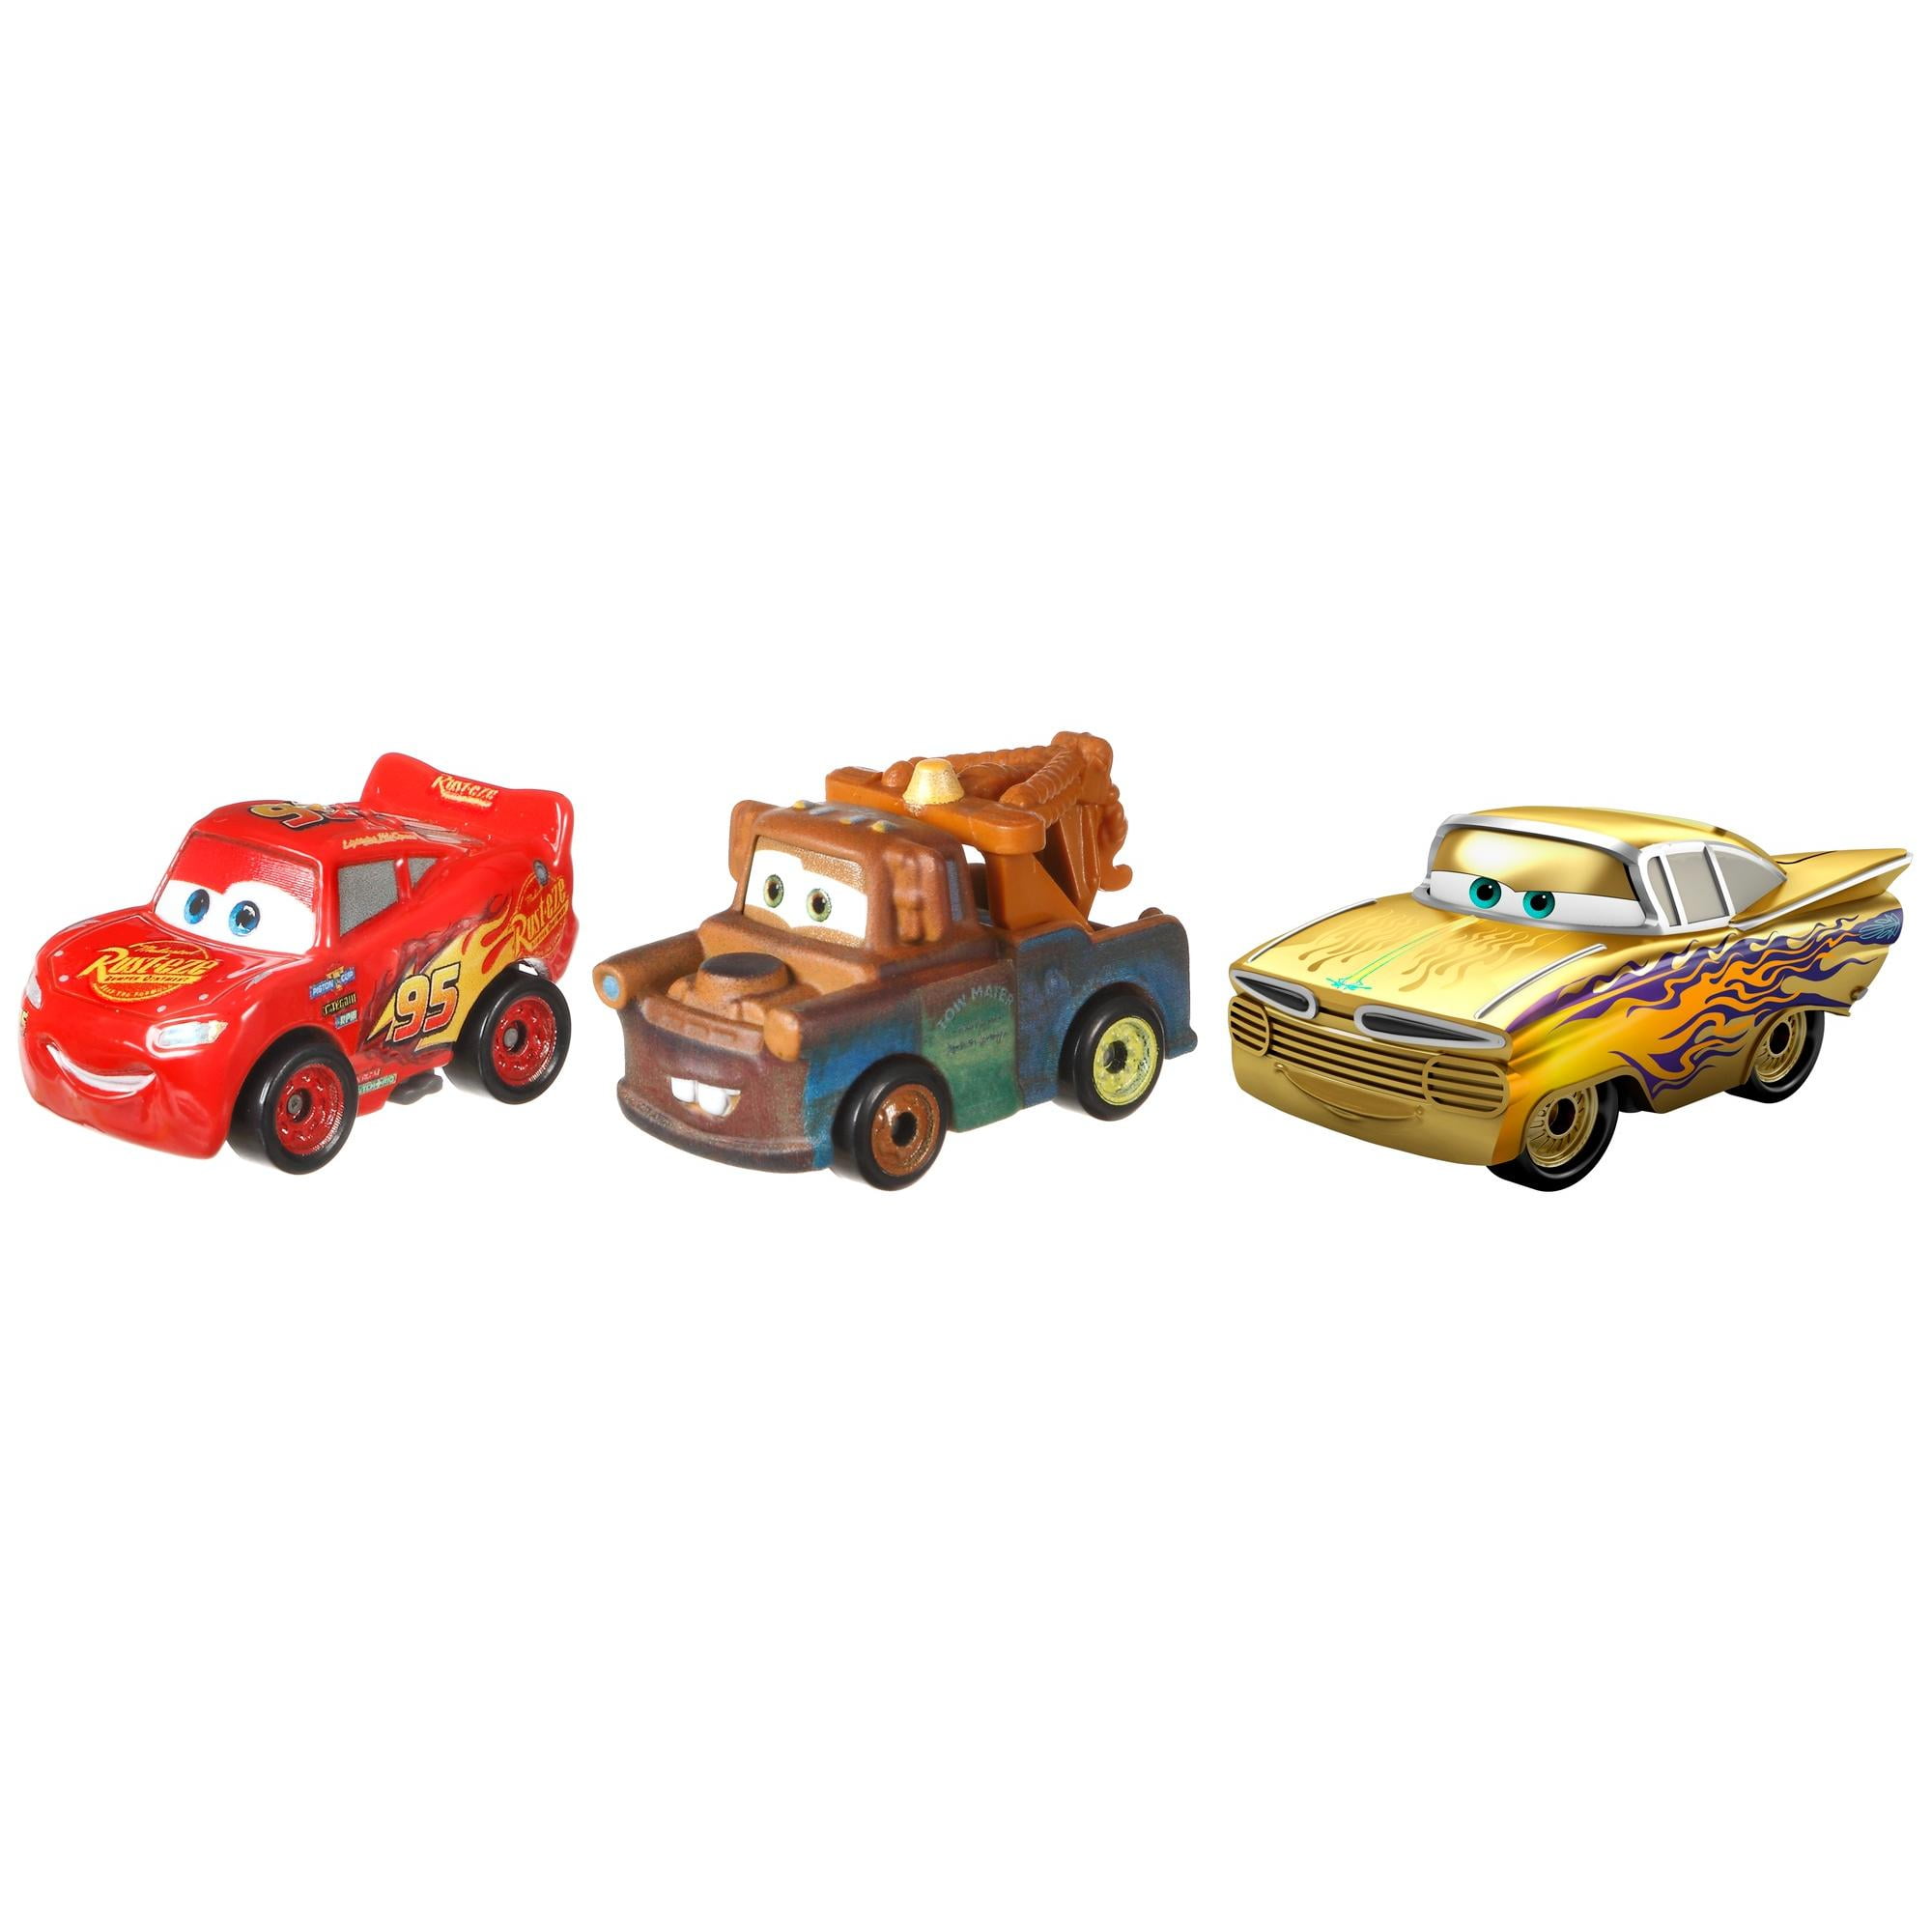 Details about   Disney Cars Metal Mini Racers Series 2 -Singles